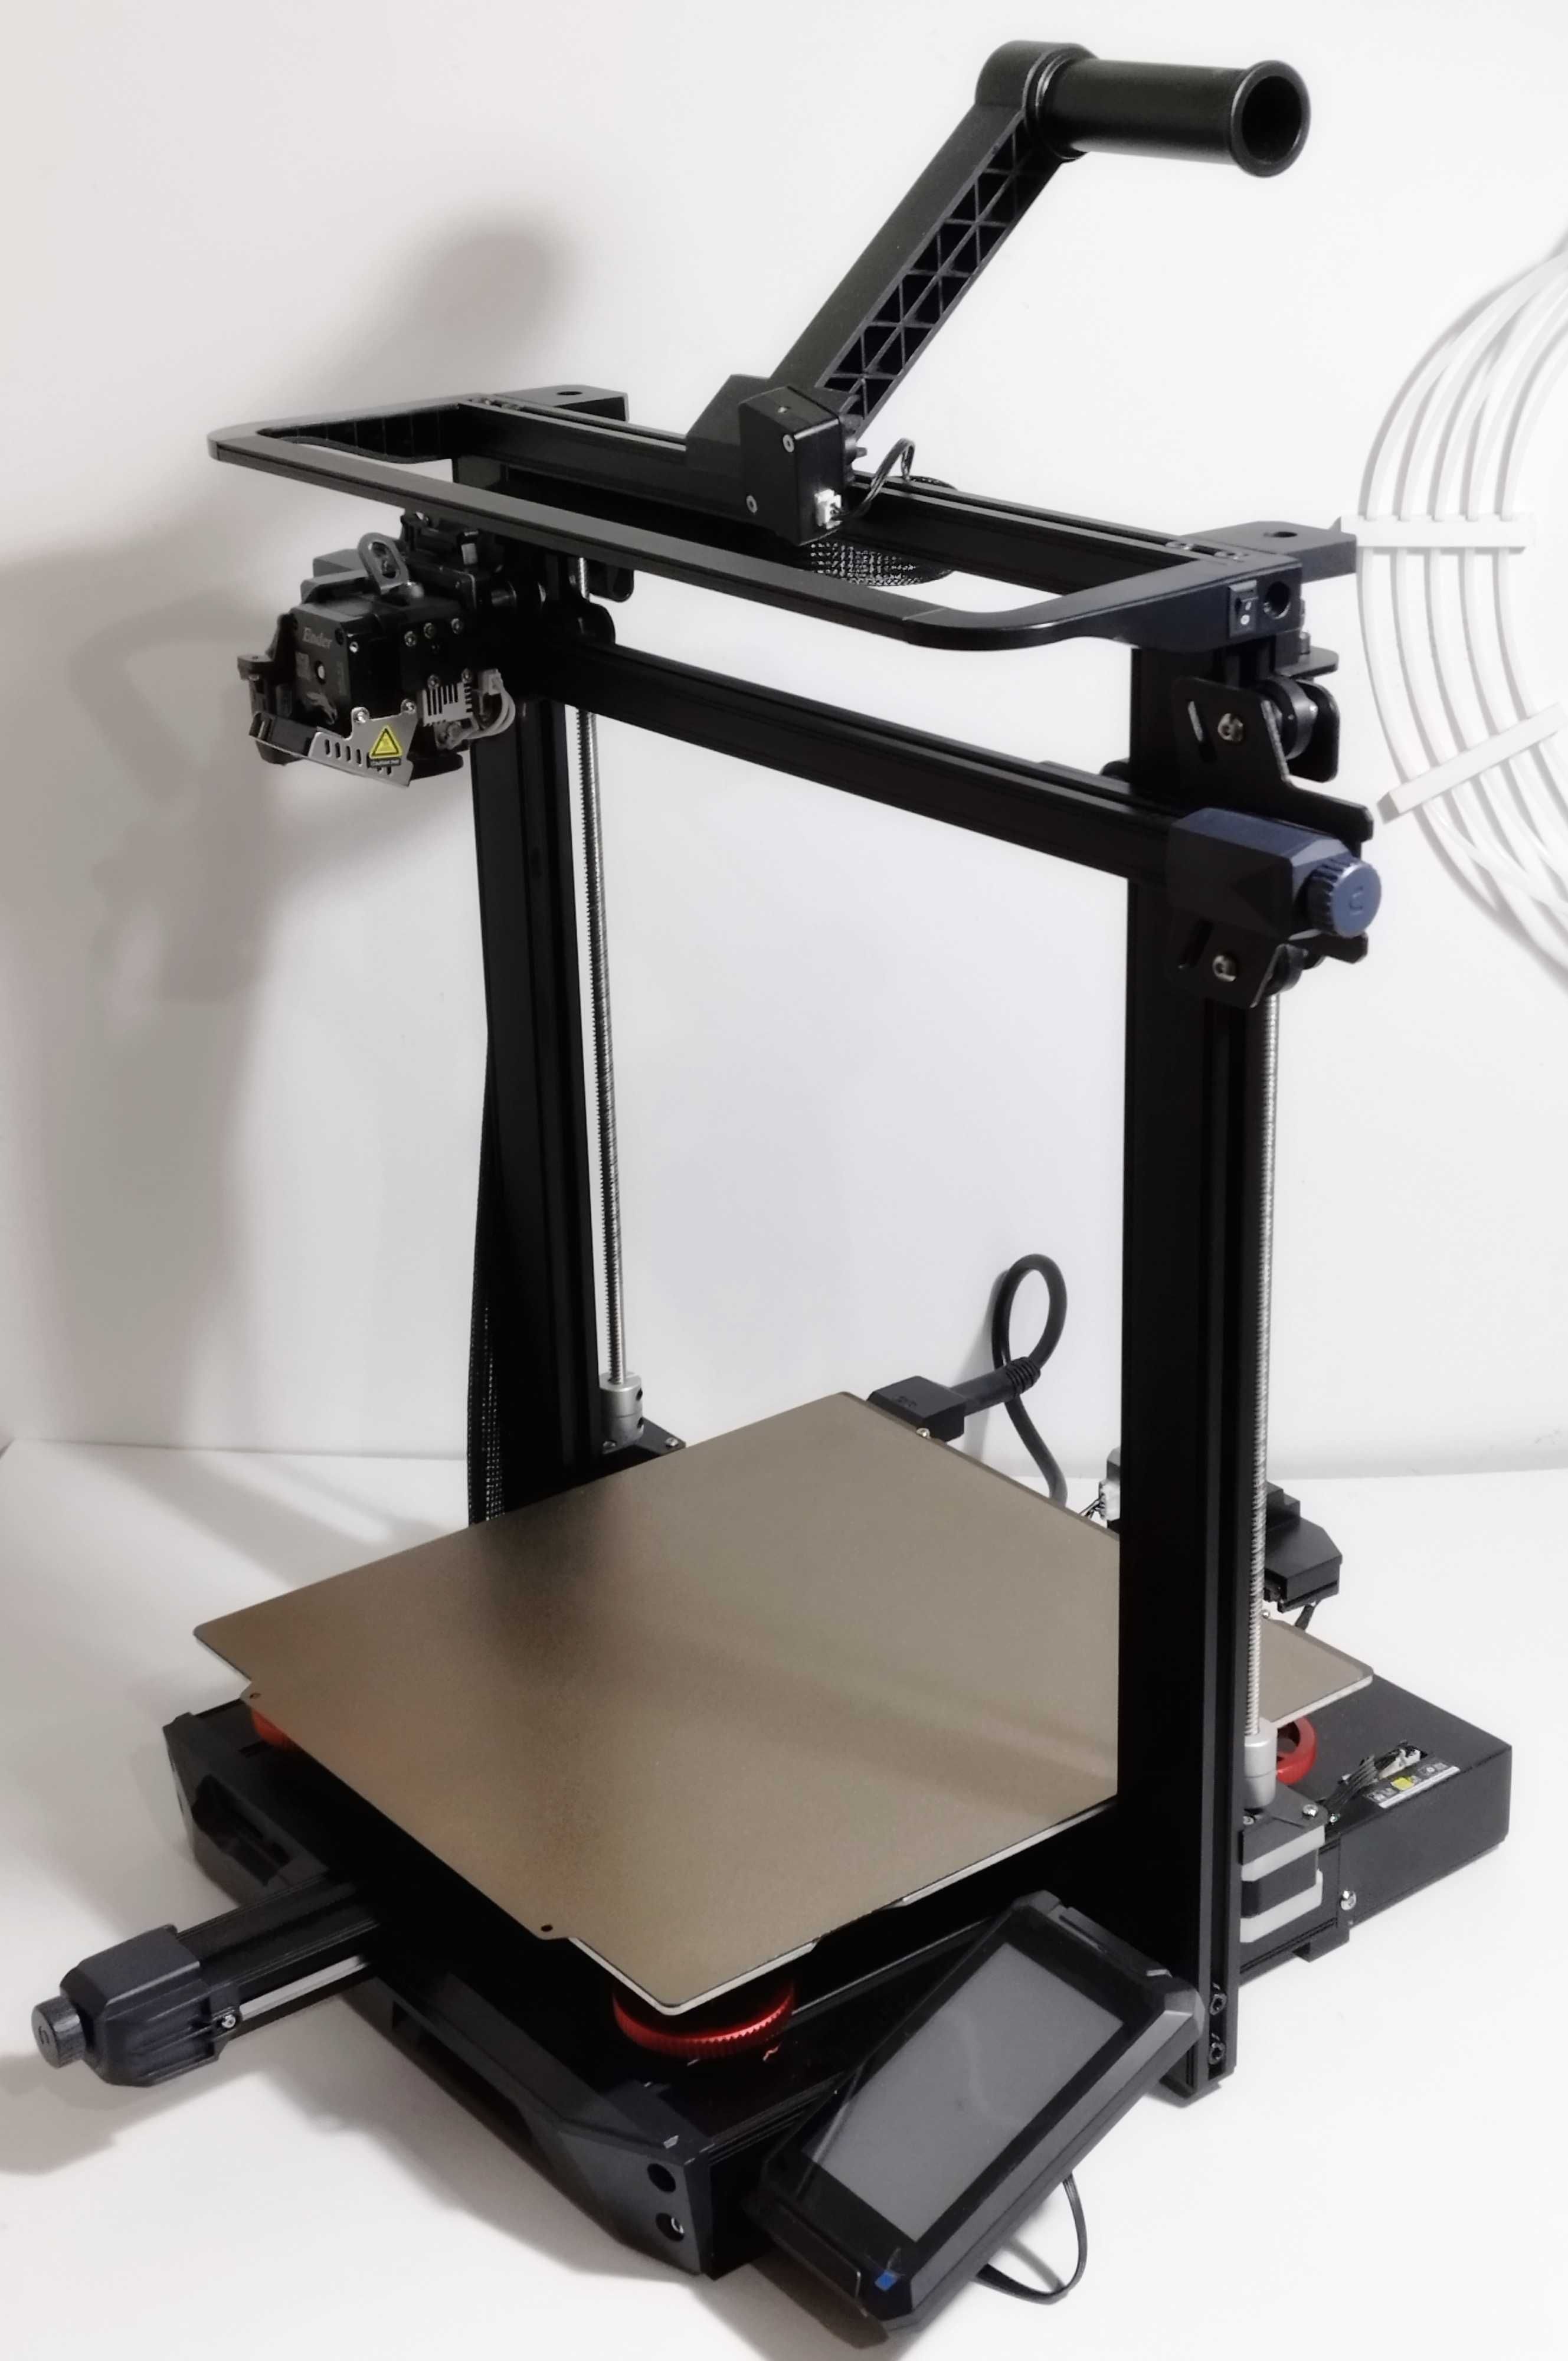 Impressora 3D Ender 3 S1 plus